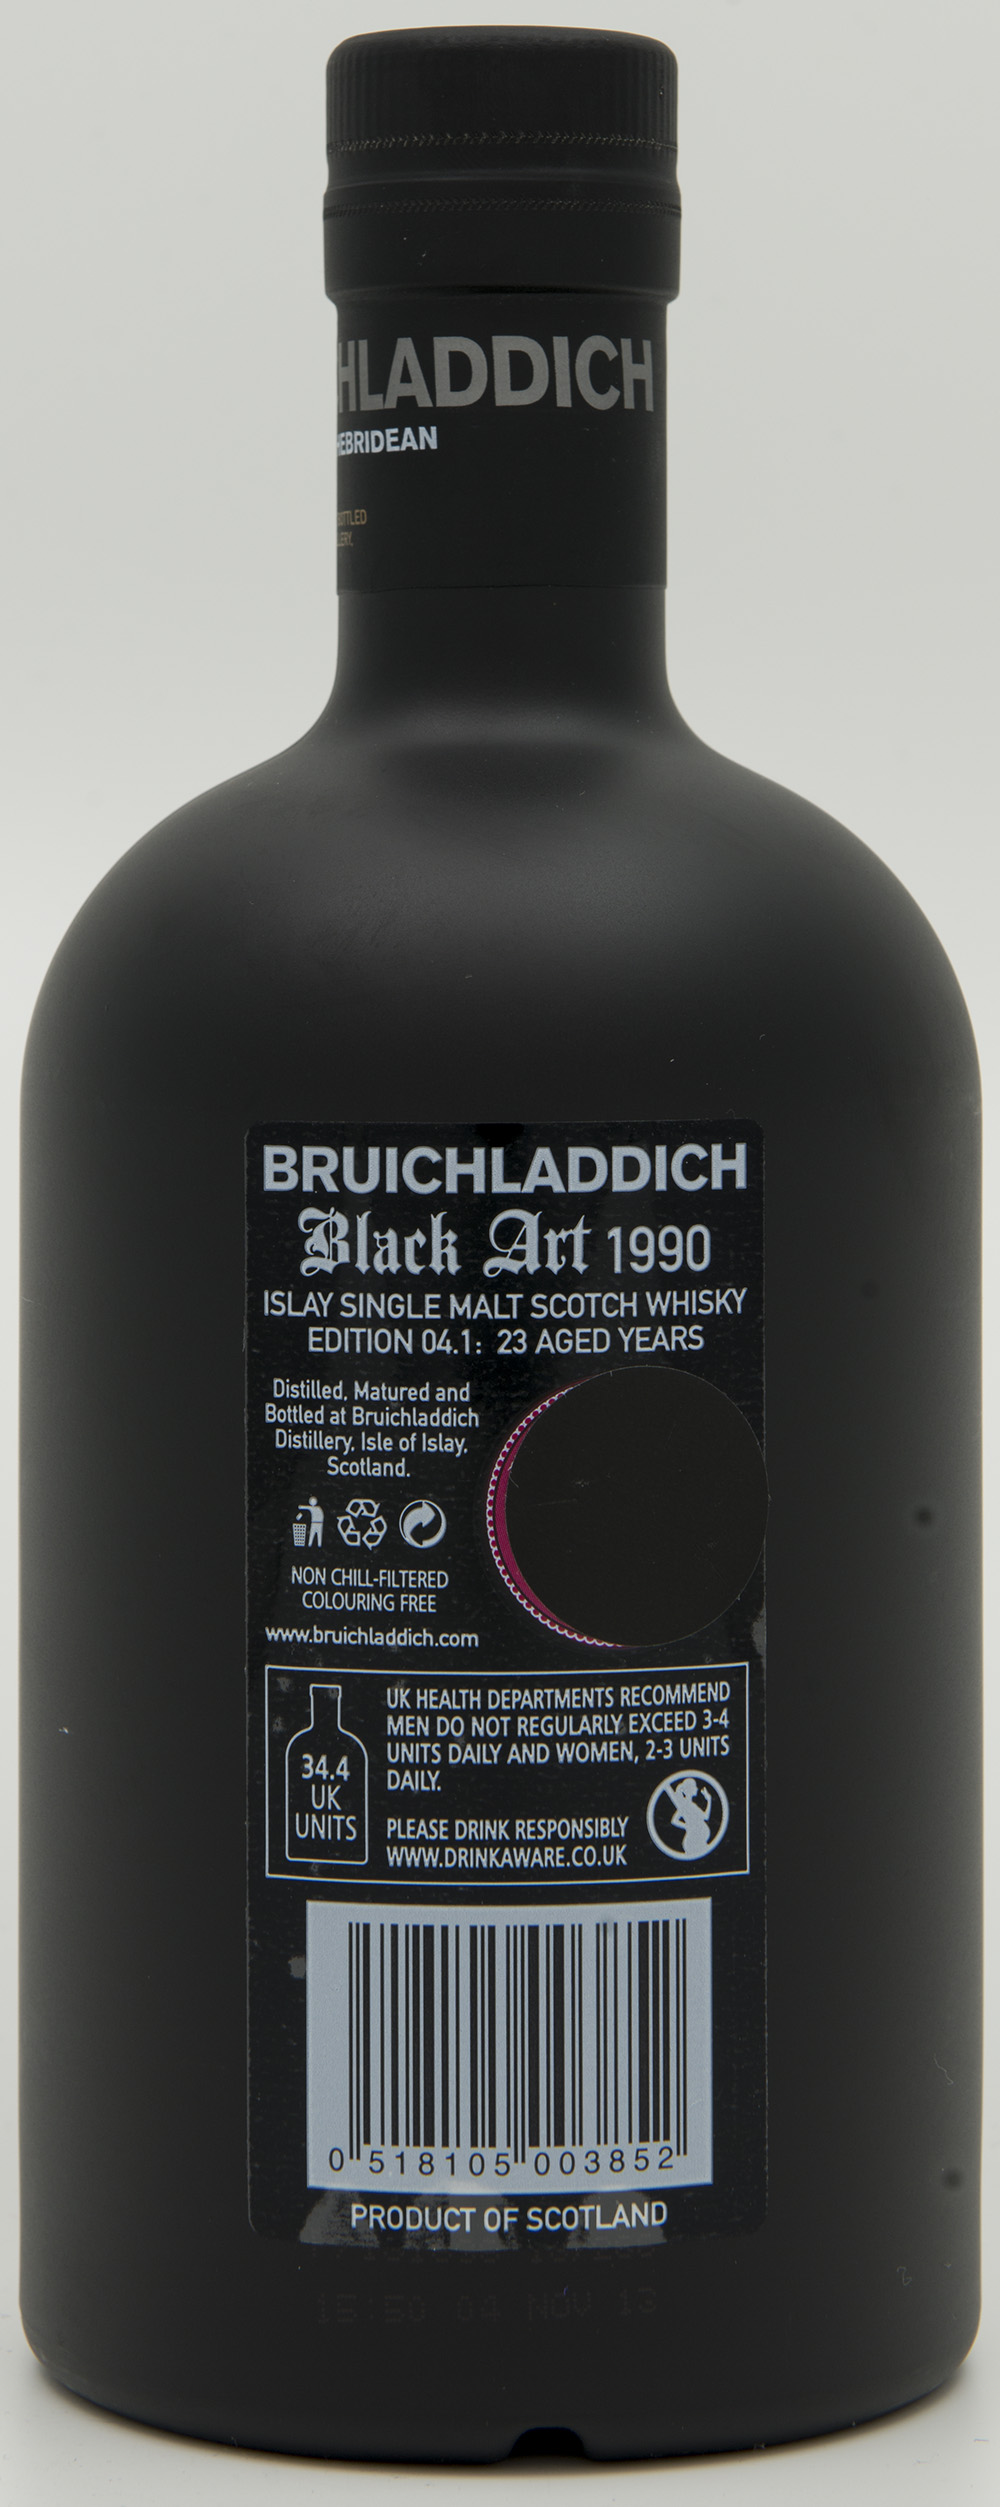 Billede: DSC_6184 - Bruichladdich Black Art 1990 - Edition 04.1 - 23 years - bottle back.jpg